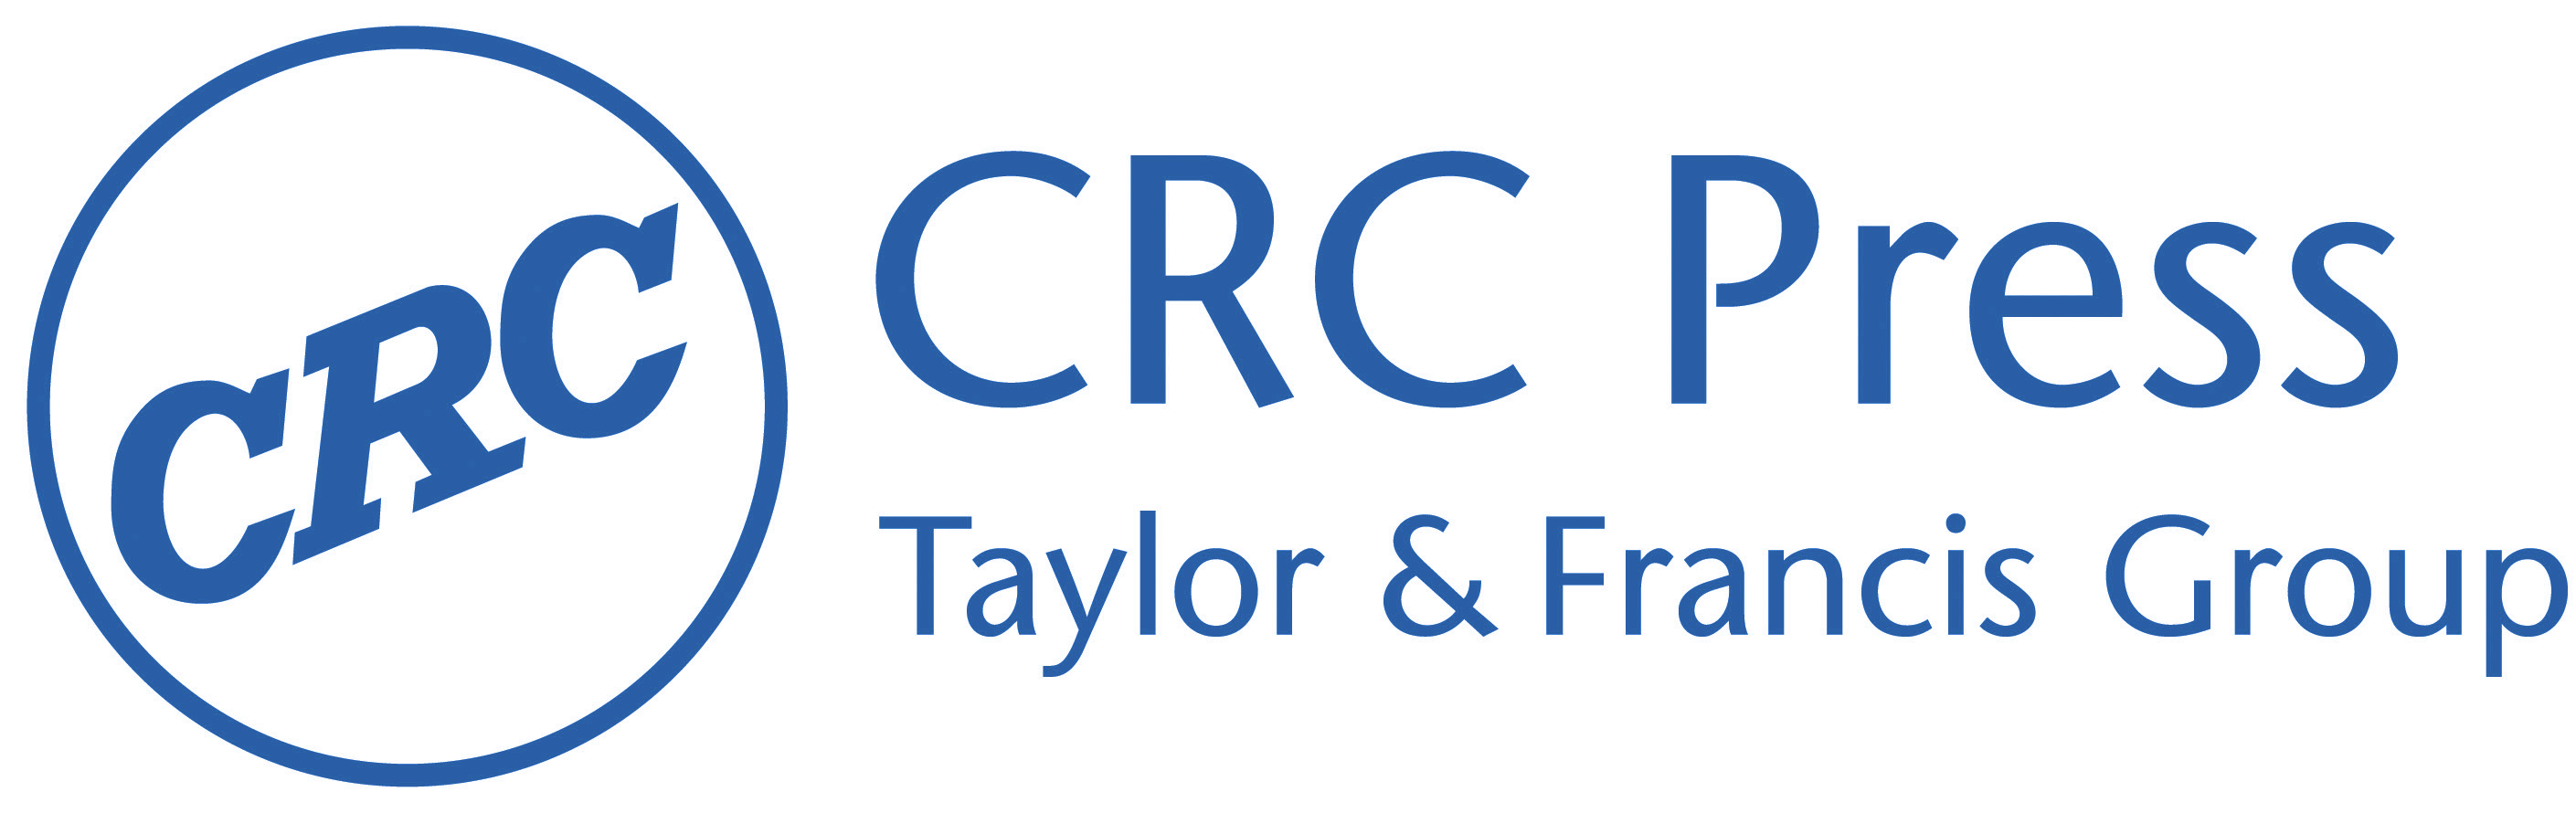 CRC_Press_logo